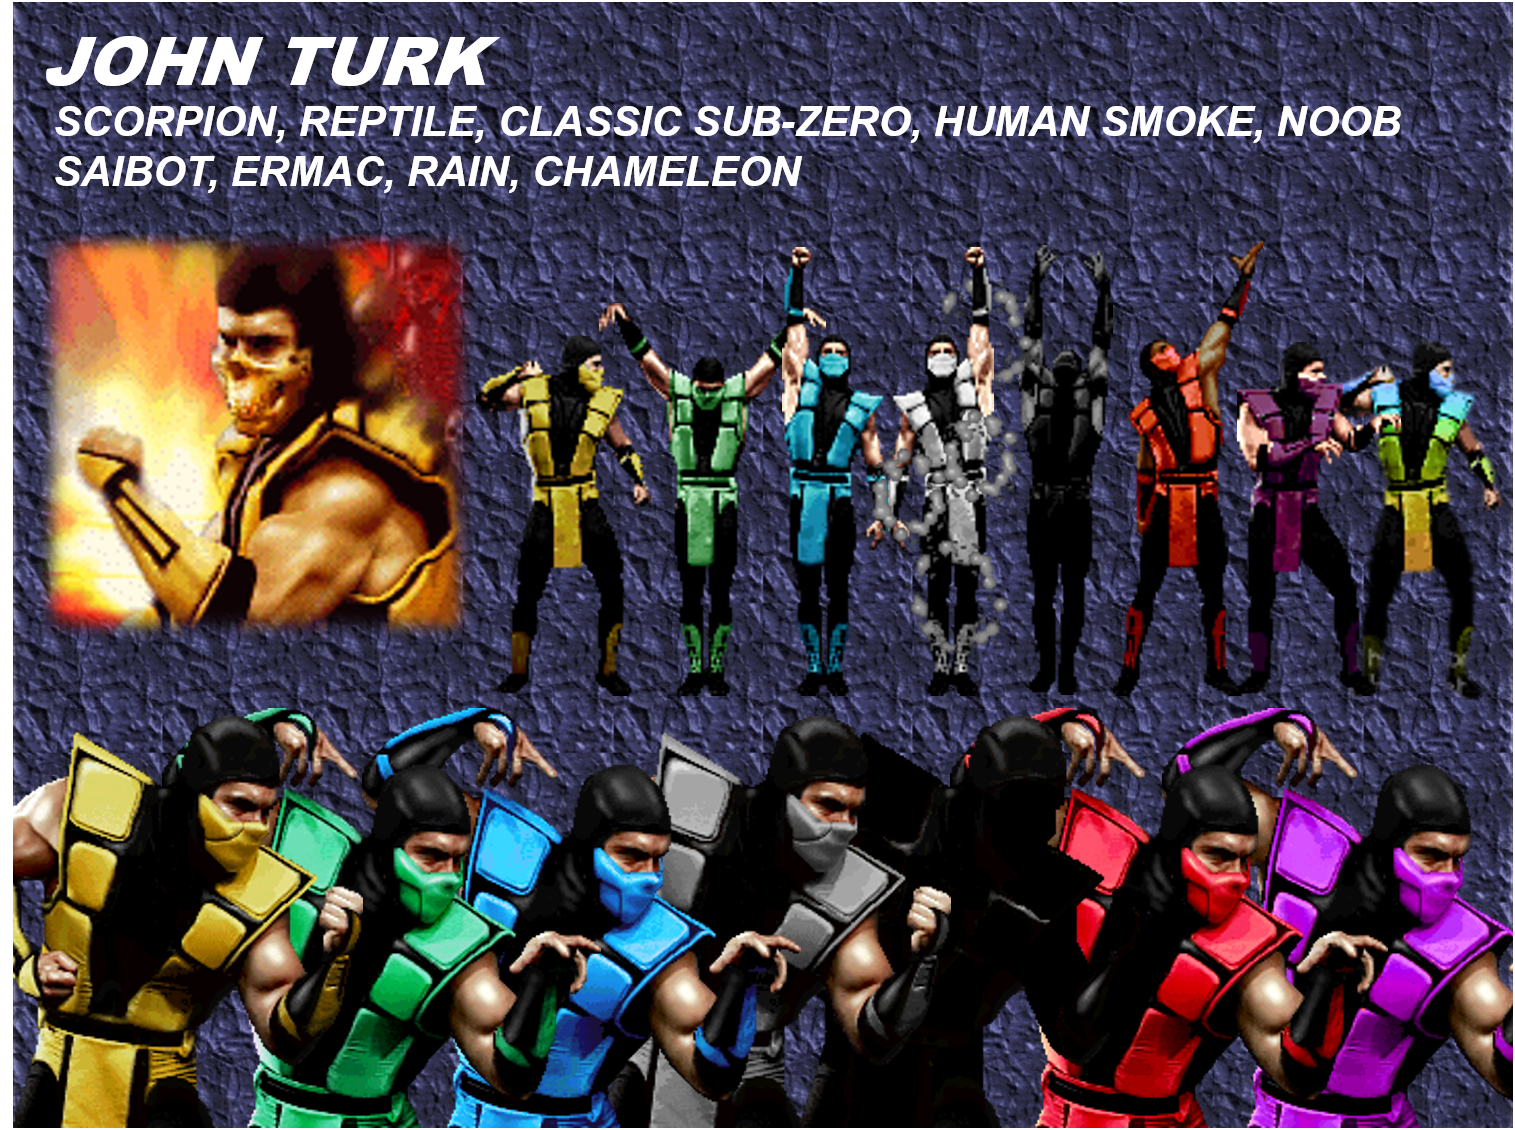 Shang Tsung MK3 cartoon  Mortal kombat, Mortal kombat art, Mortal kombat 3